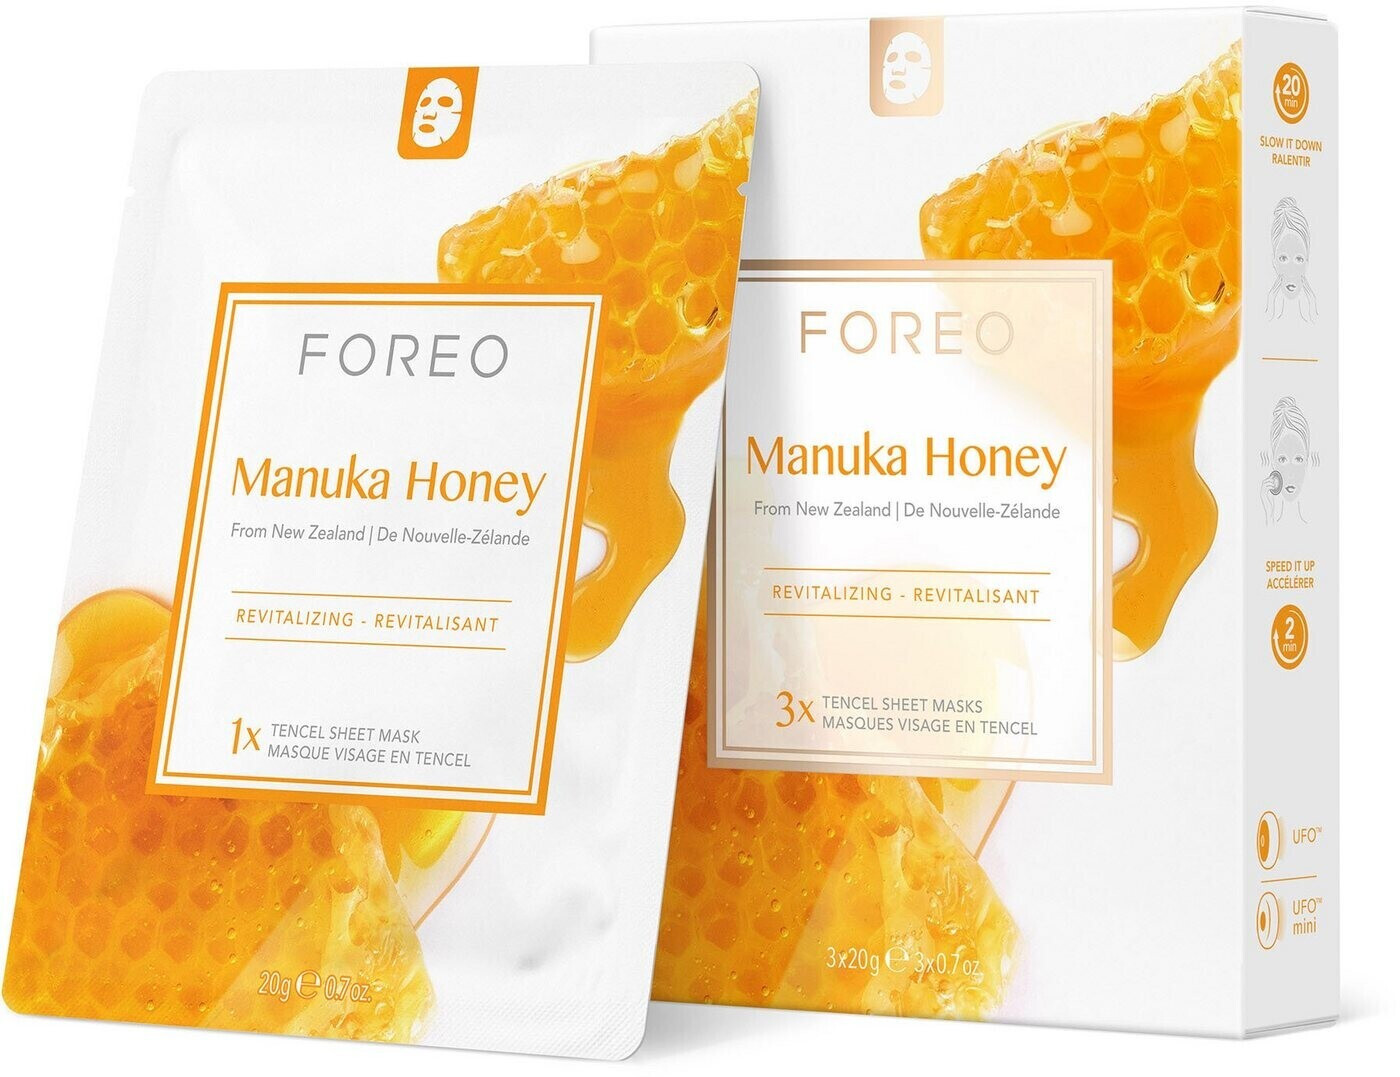 Foreo Farm to Face Collection Manuka Honey (3 Stk.) ab 10,99 € |  Preisvergleich bei